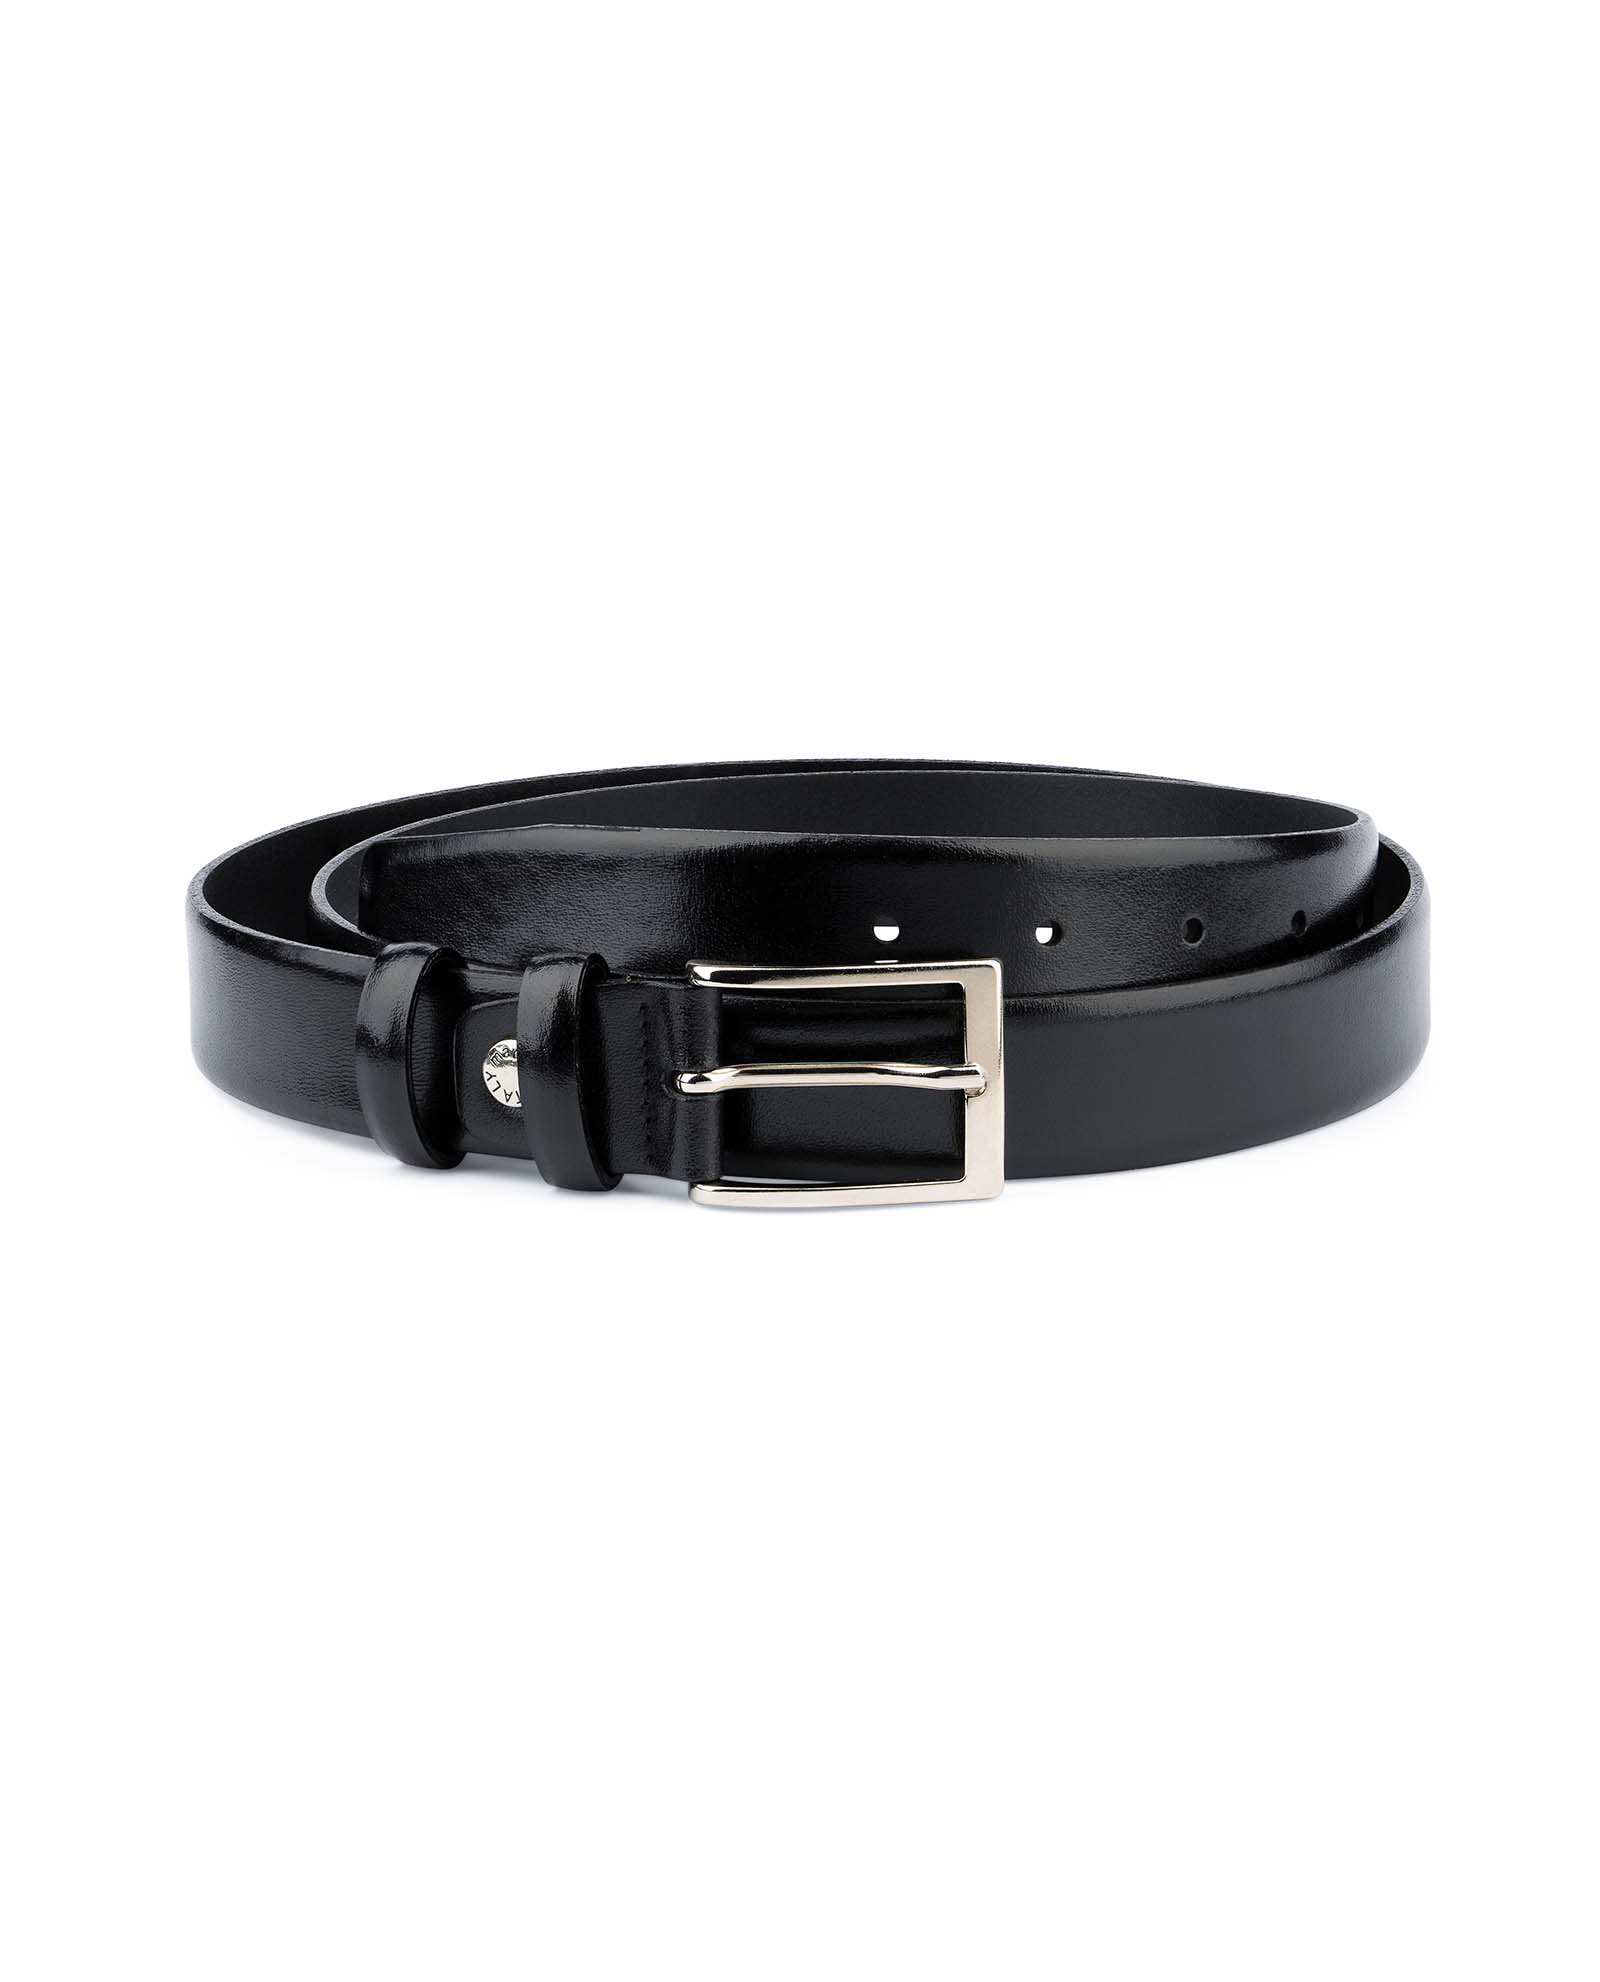 Buy Black Leather Belt With Silver Buckle | LeatherBeltsOnline.com